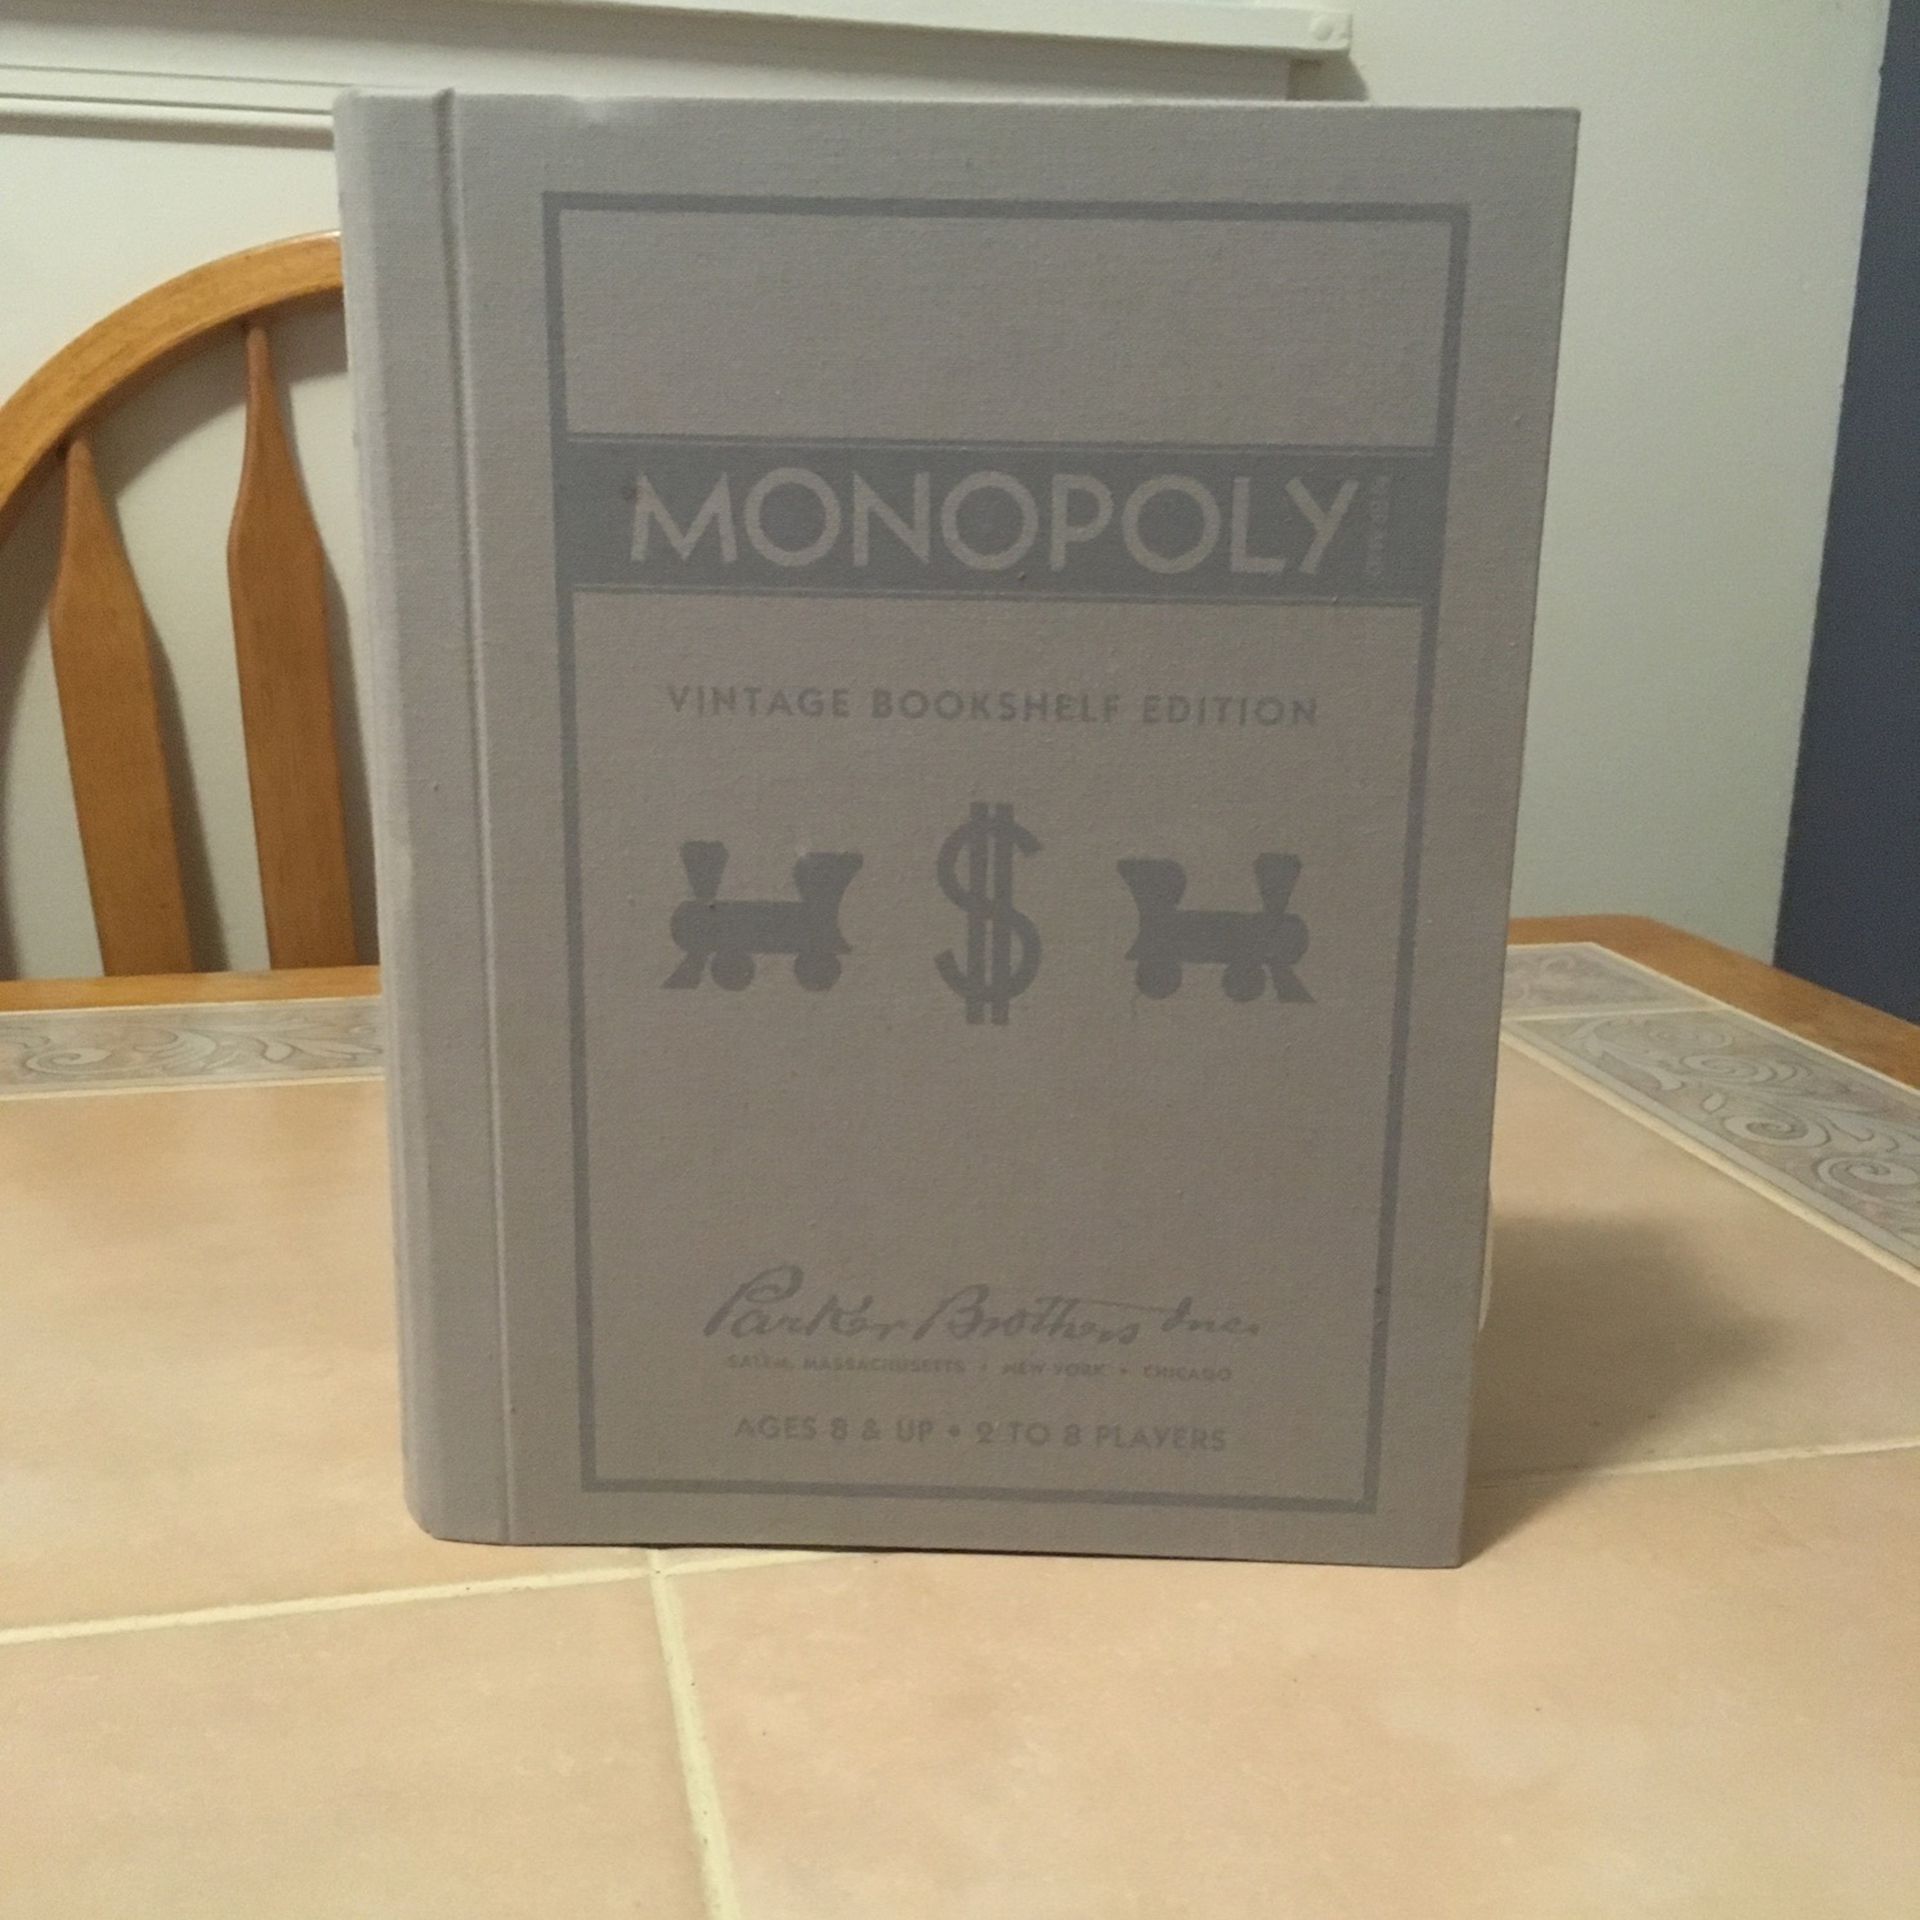 MONOPOLY ( VINTAGE BOOKSHELF EDITION)